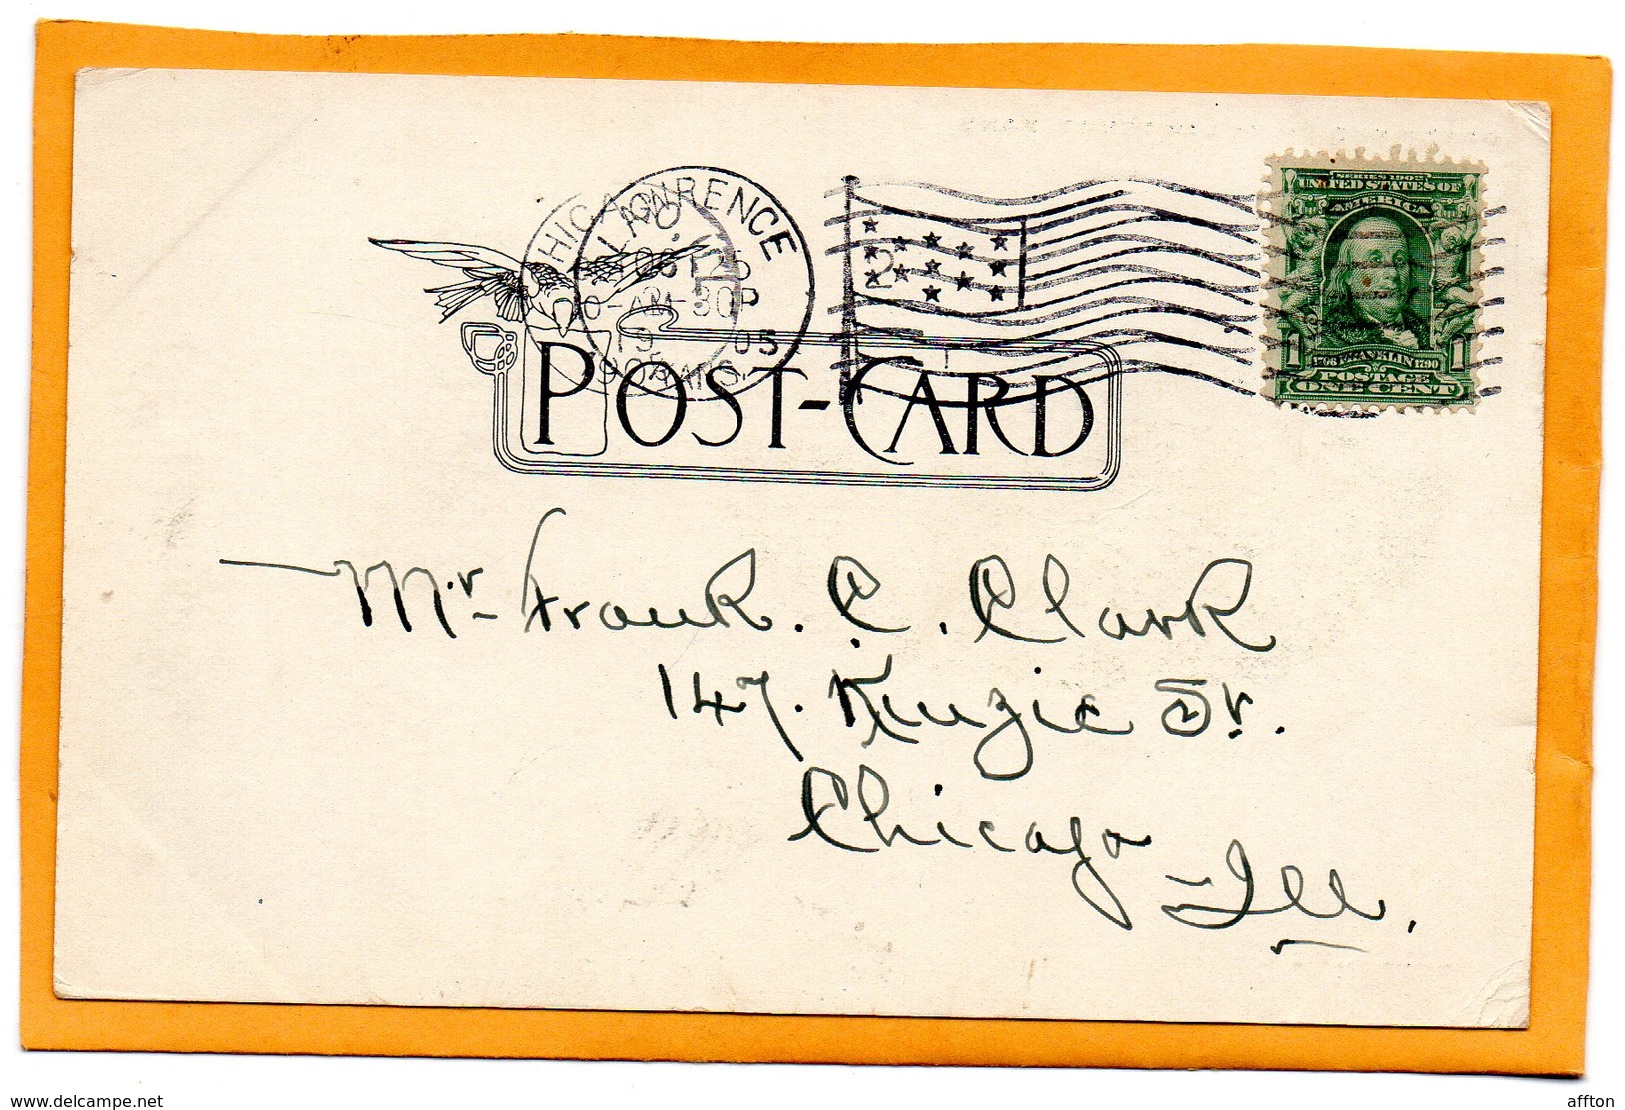 Lawrence Kans 1905 Postcard - Lawrence